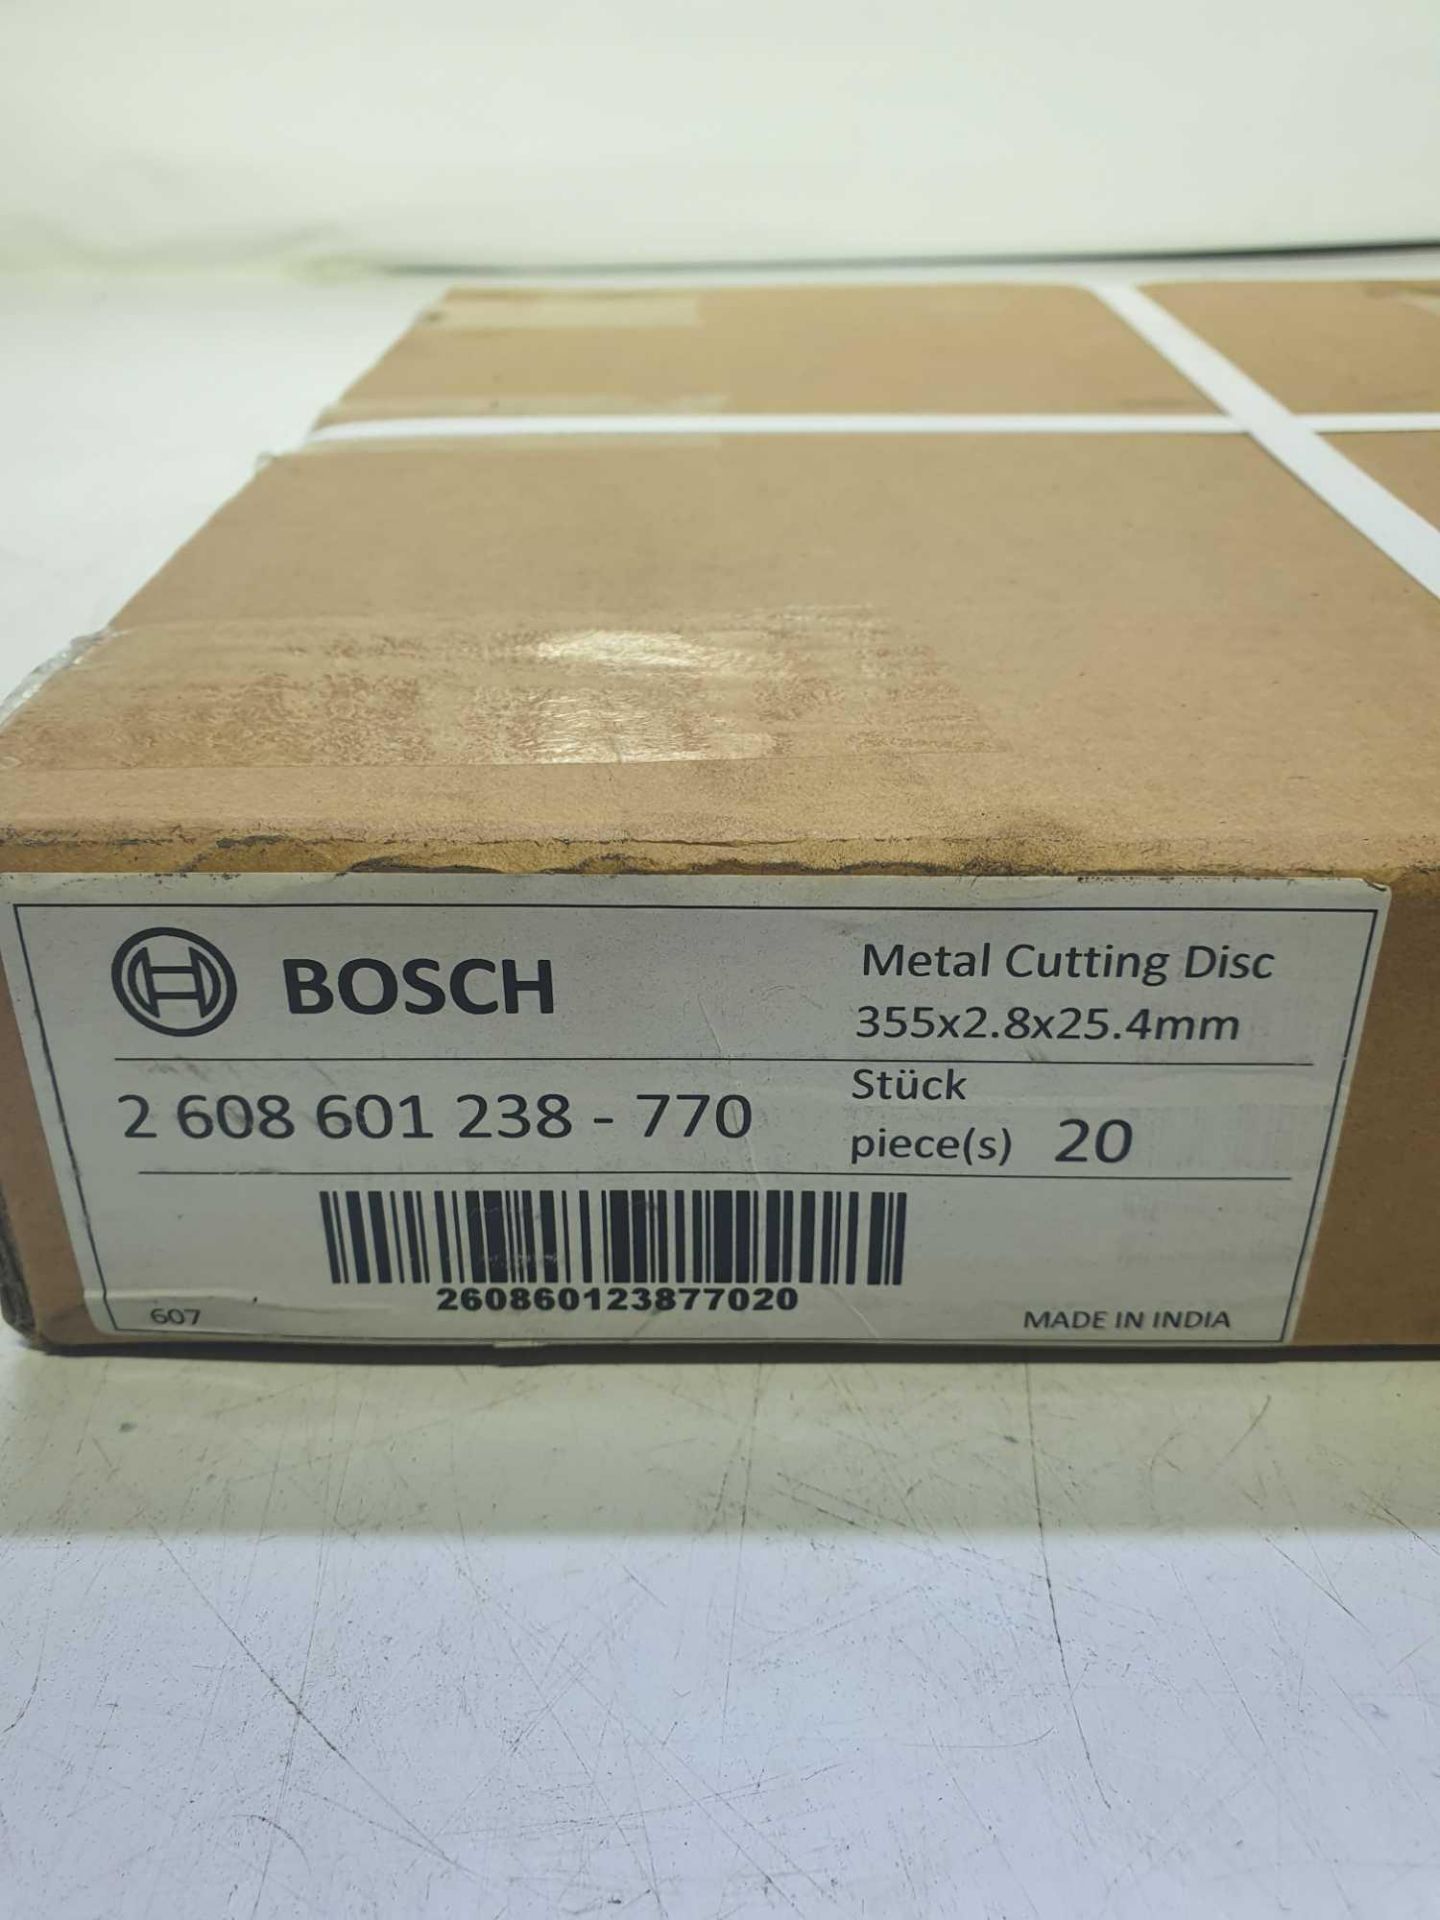 Bosch metal cutting disc 20pcs - Image 2 of 2